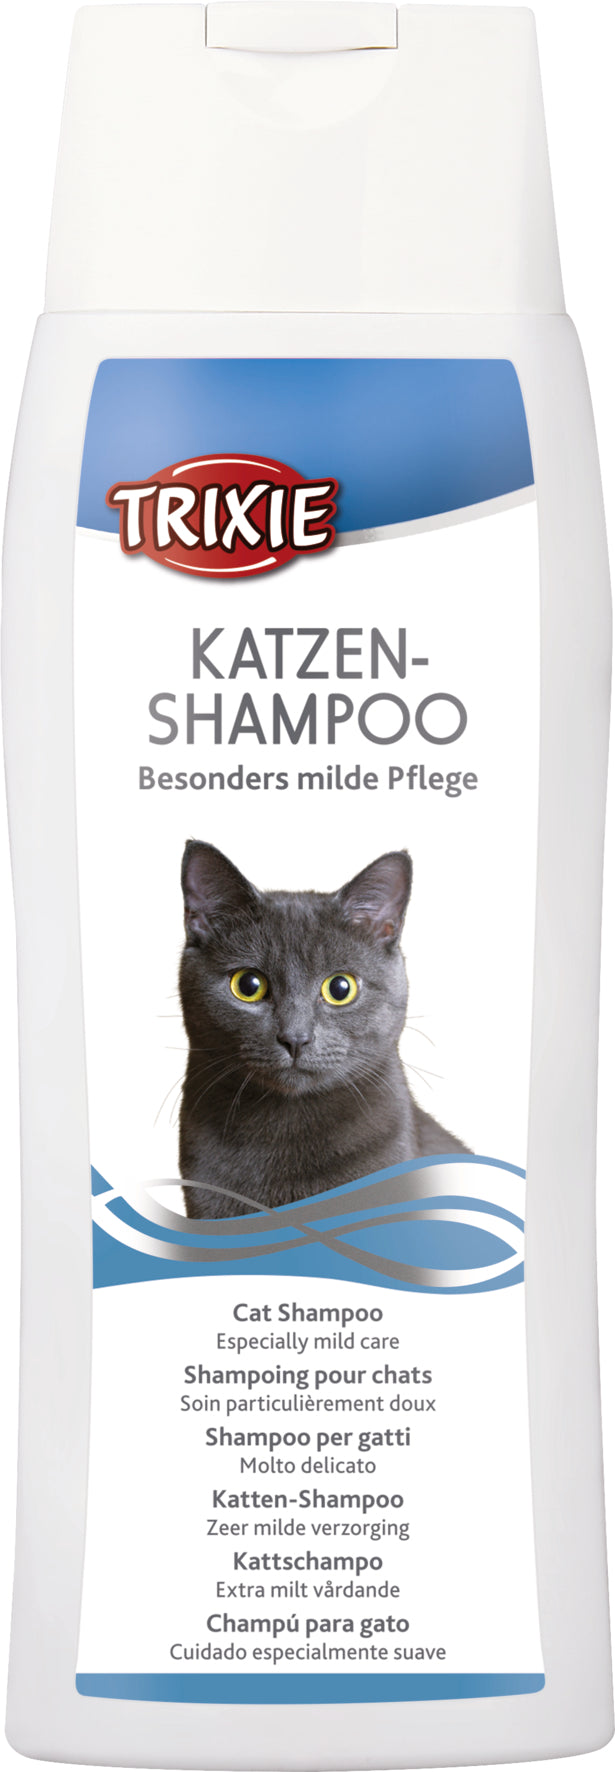 Trixie Cat Shampoo